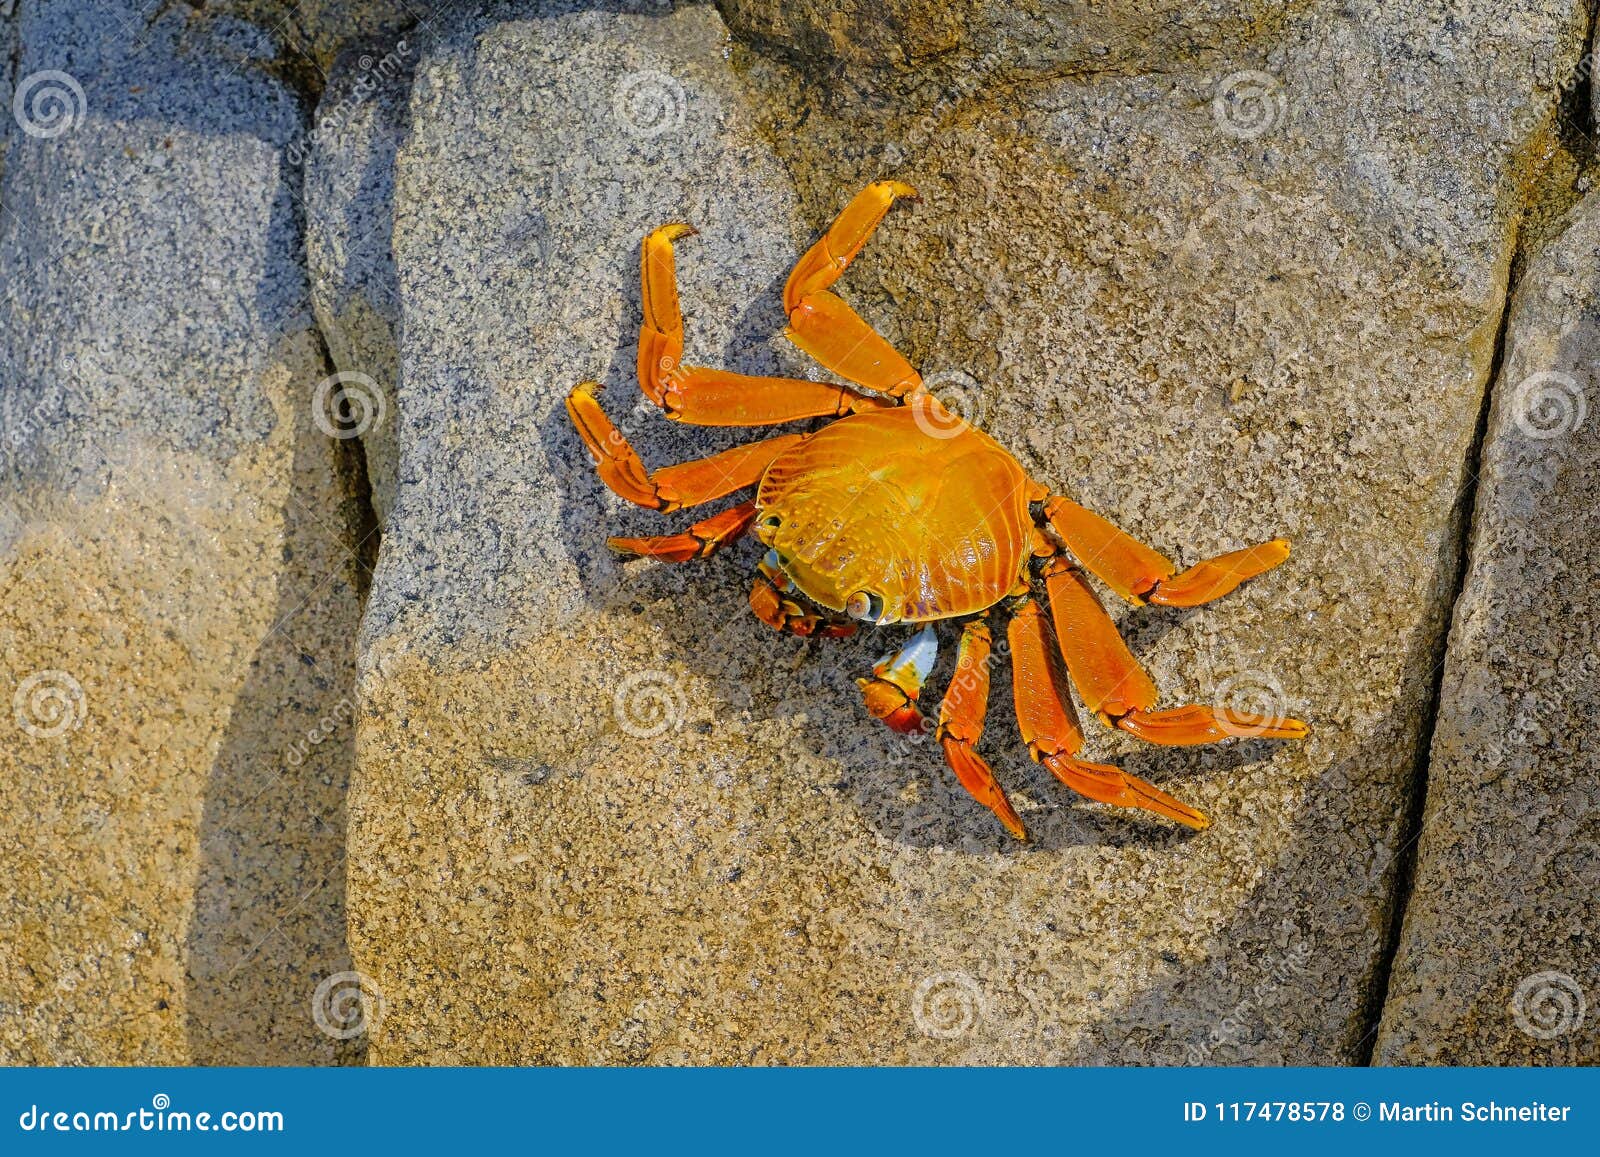 beautiful sally lightfoot crab, grapsus grapsus, on rocks, pacific ocean coast, tocopilla, chile